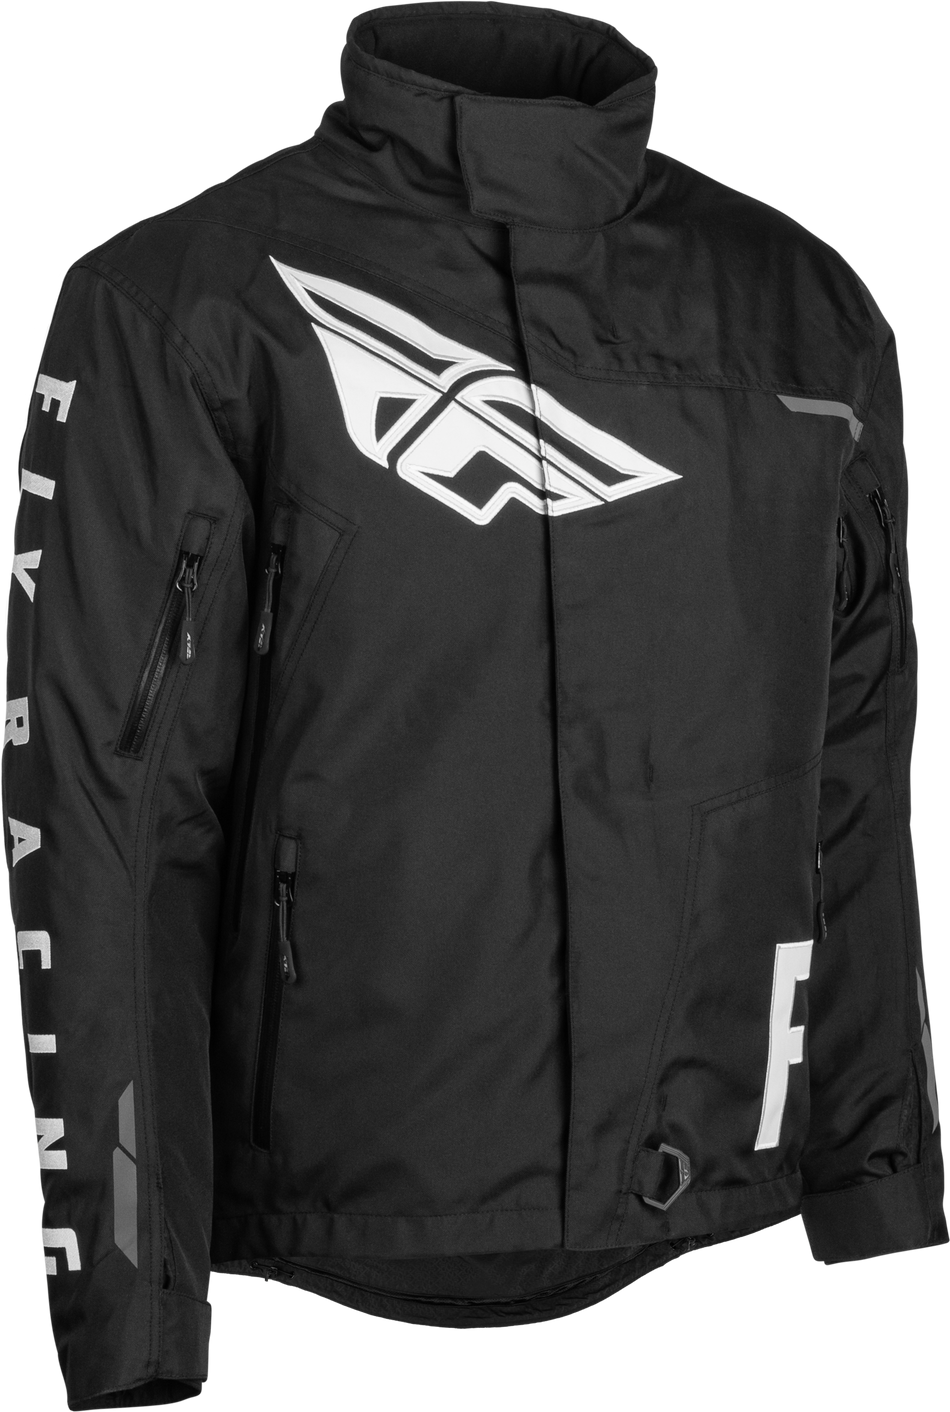 FLY RACING Snx Pro Jacket Black 4x 470-41154X